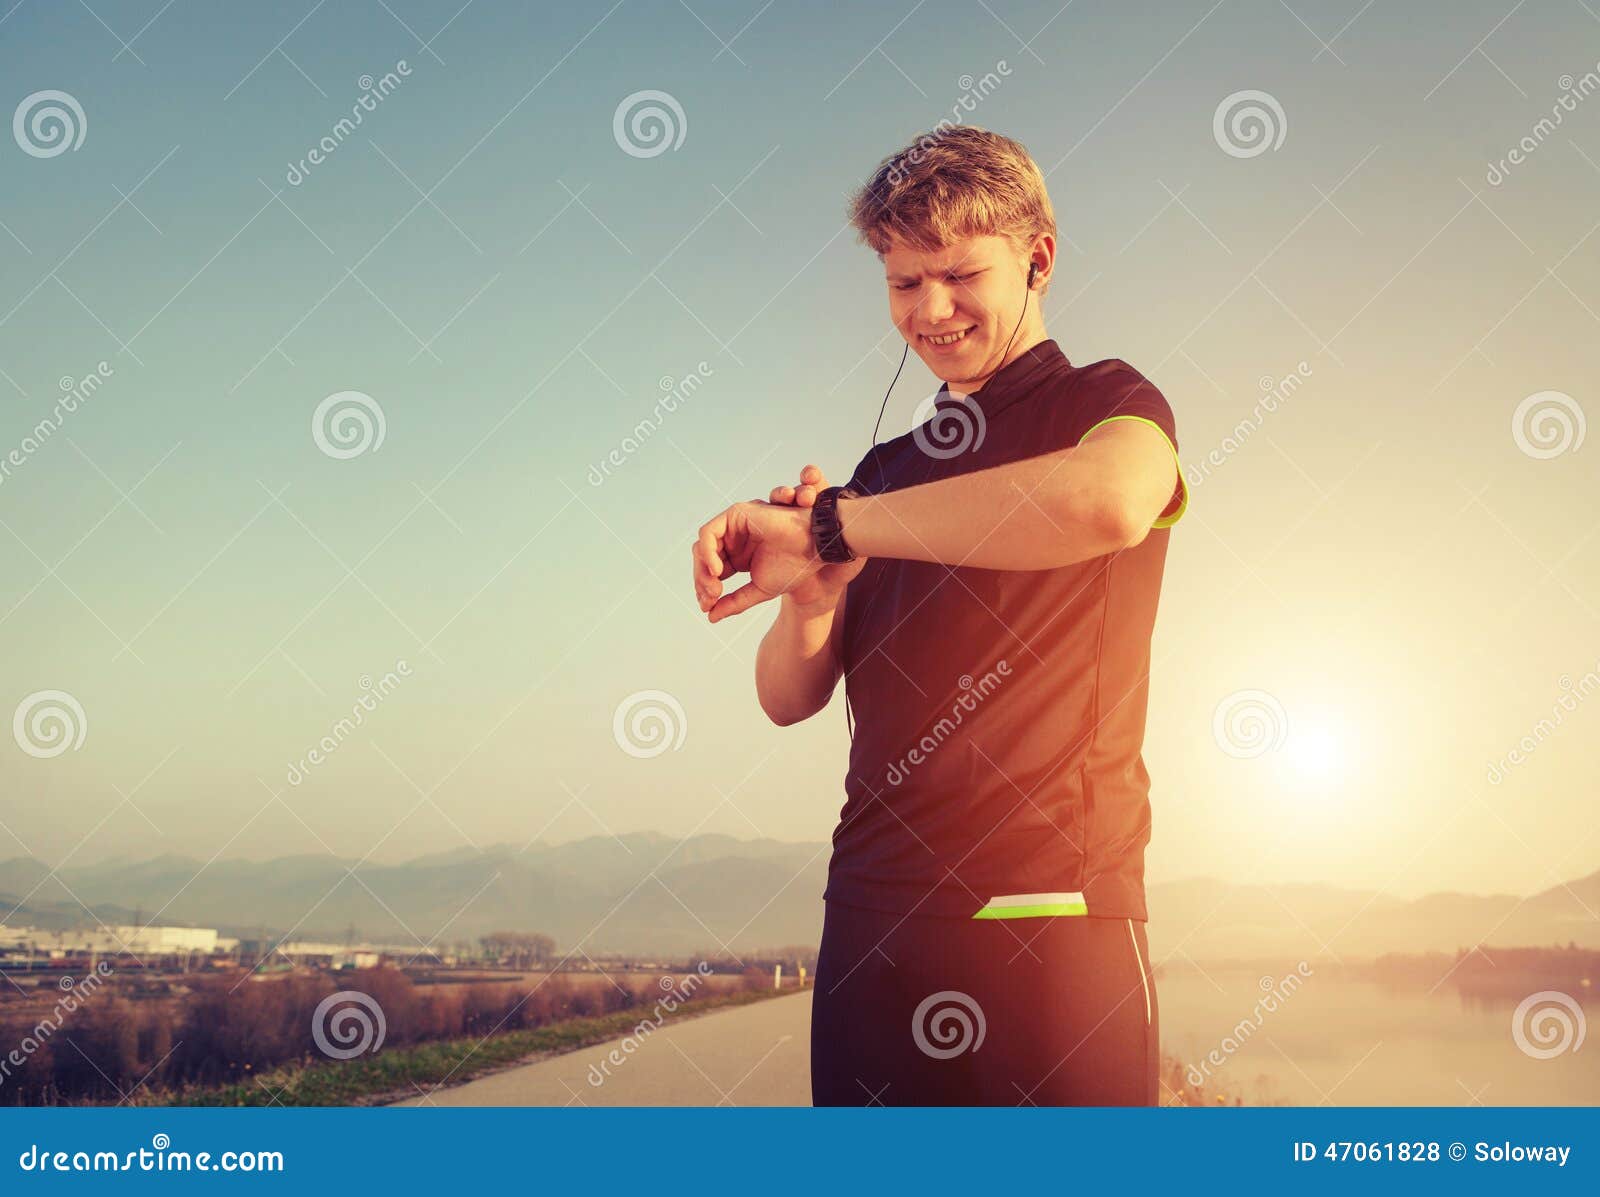 runner starts his modern stopwatch before jogging